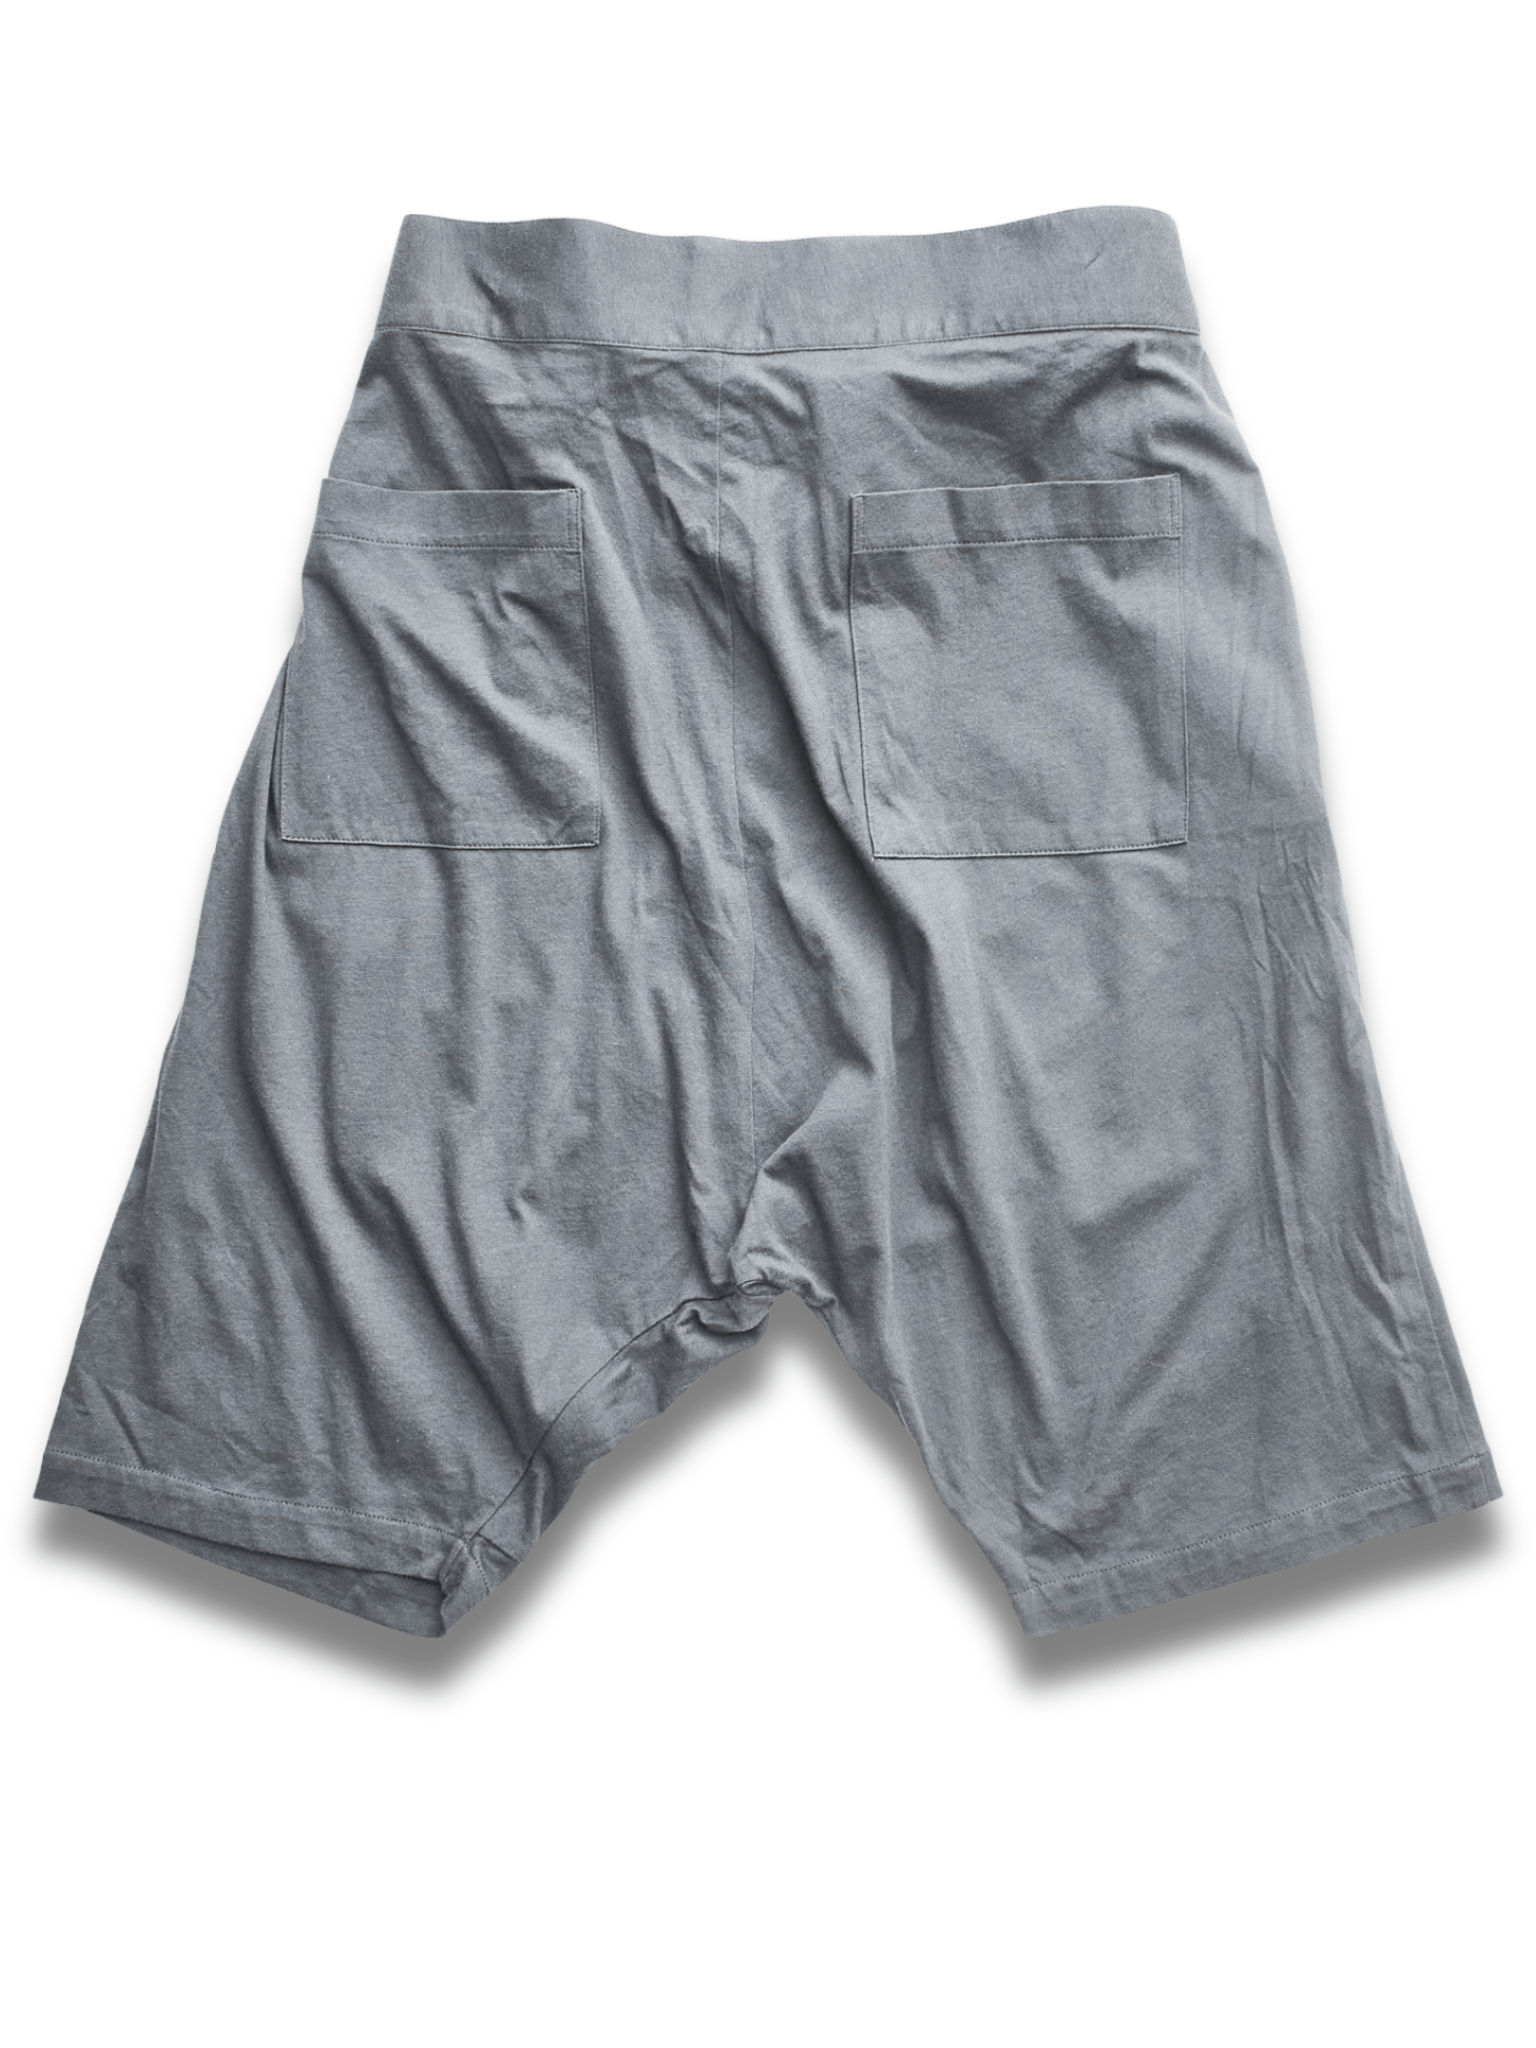 Grey Double Zip Drop Crotch Jogger Shorts with Waist Ties